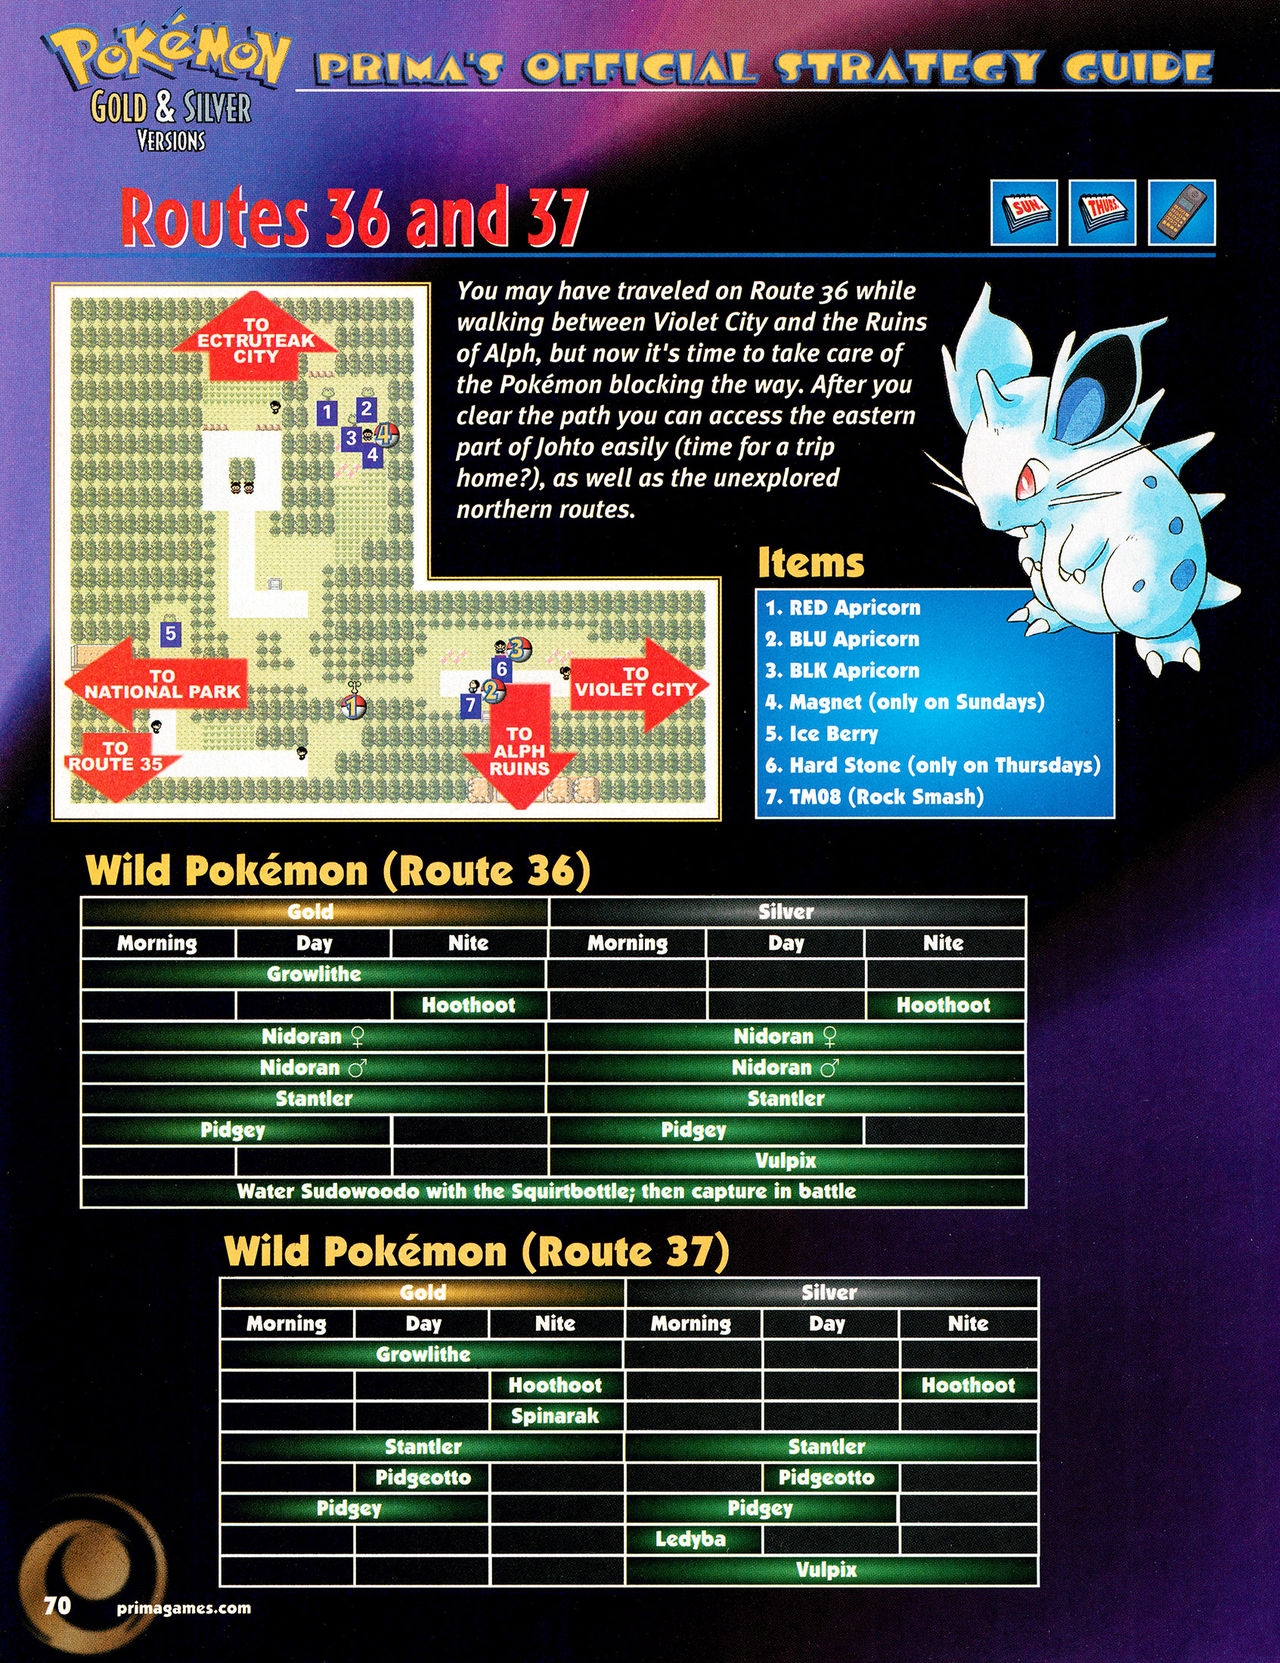 Pokémon Gold & Silver Versions - Strategy Guide 71